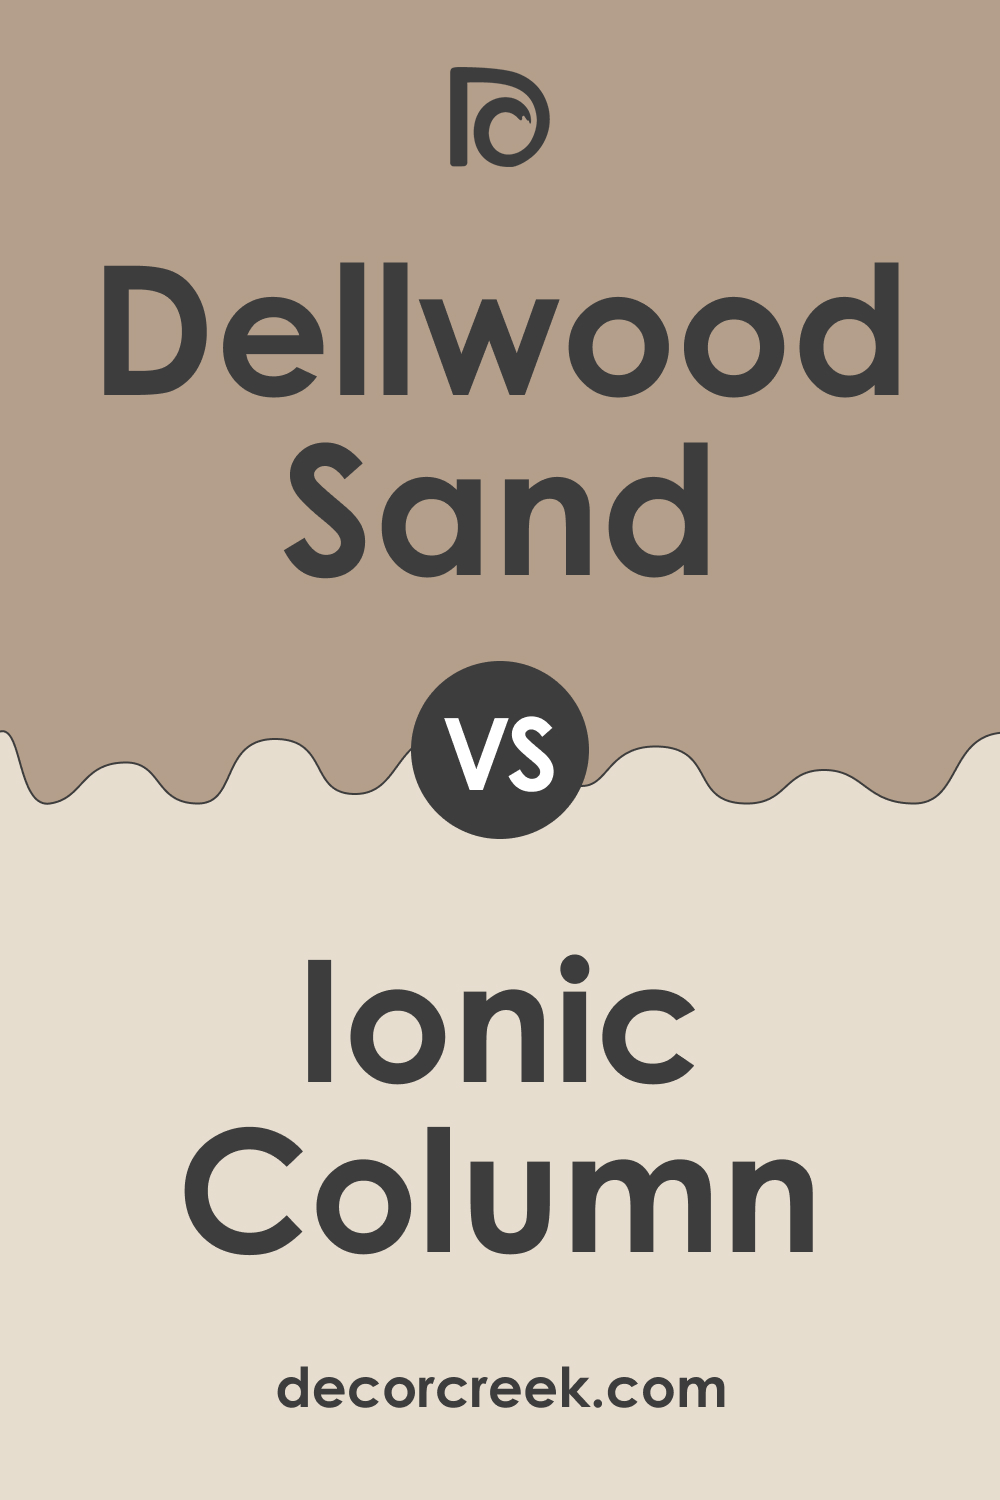 Dellwood Sand 1019 vs. BM 1016 Ionic Column